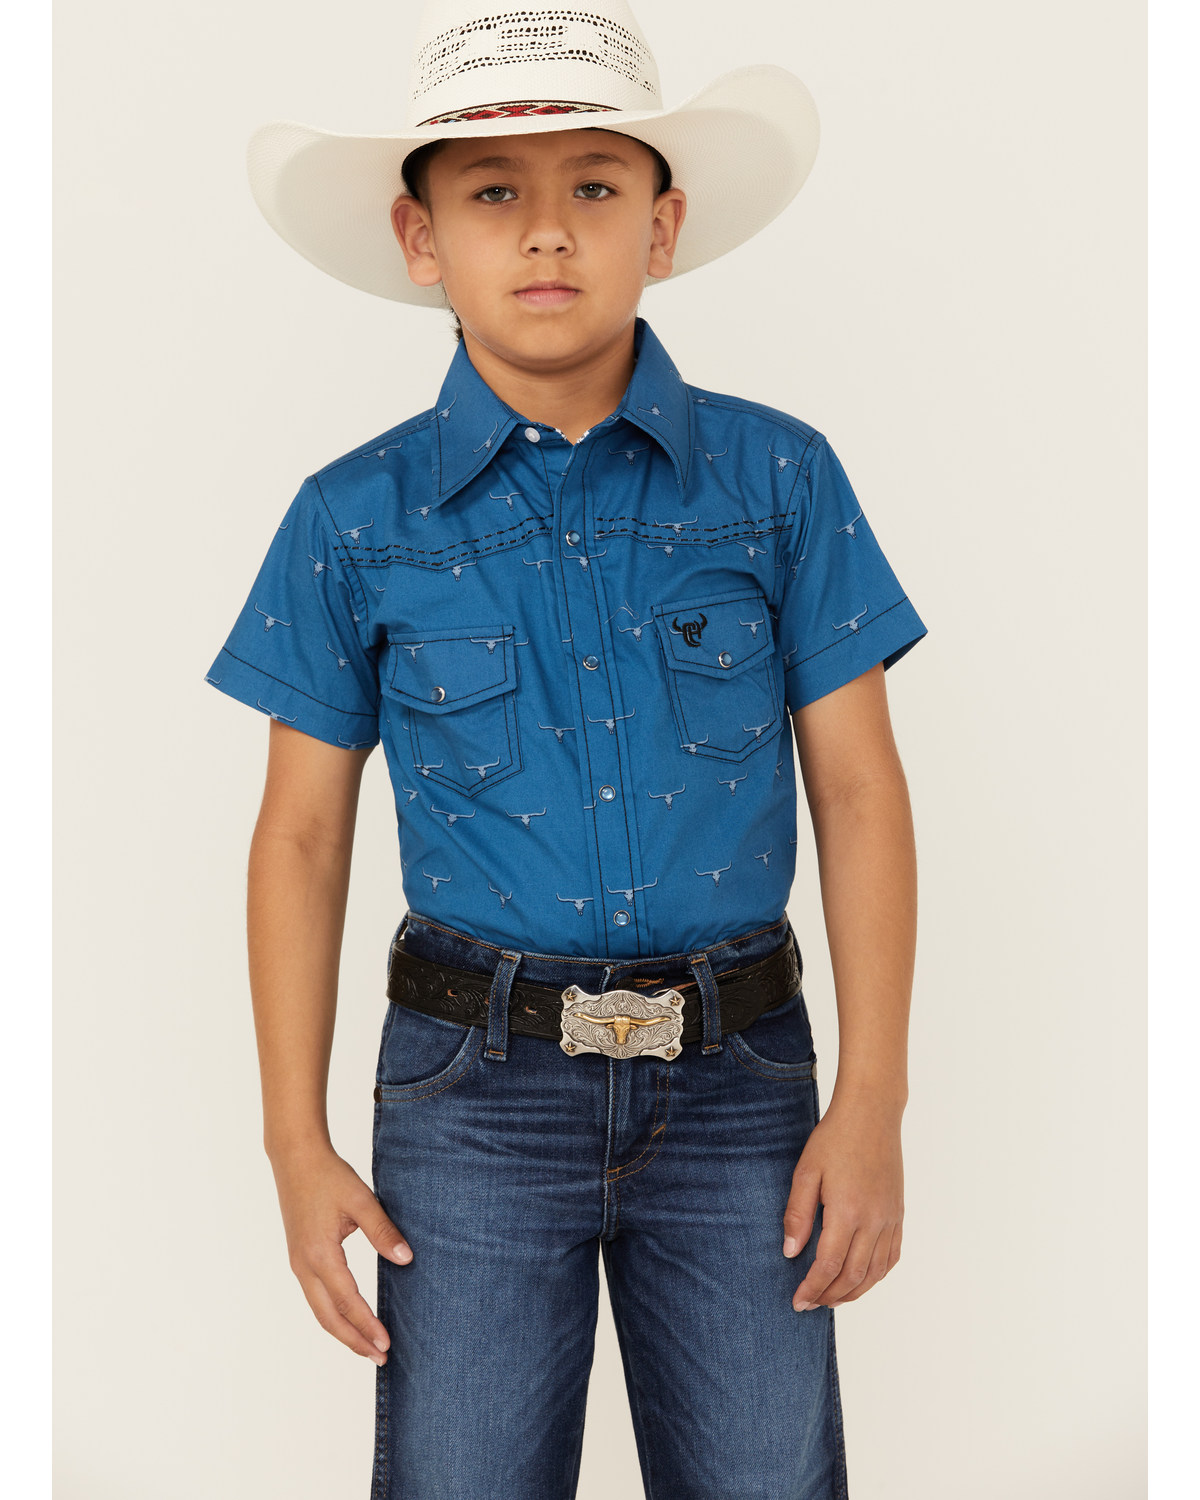 Cowboy Hardware Boys' Steerhead Print Short Sleeve Snap Western Shirt